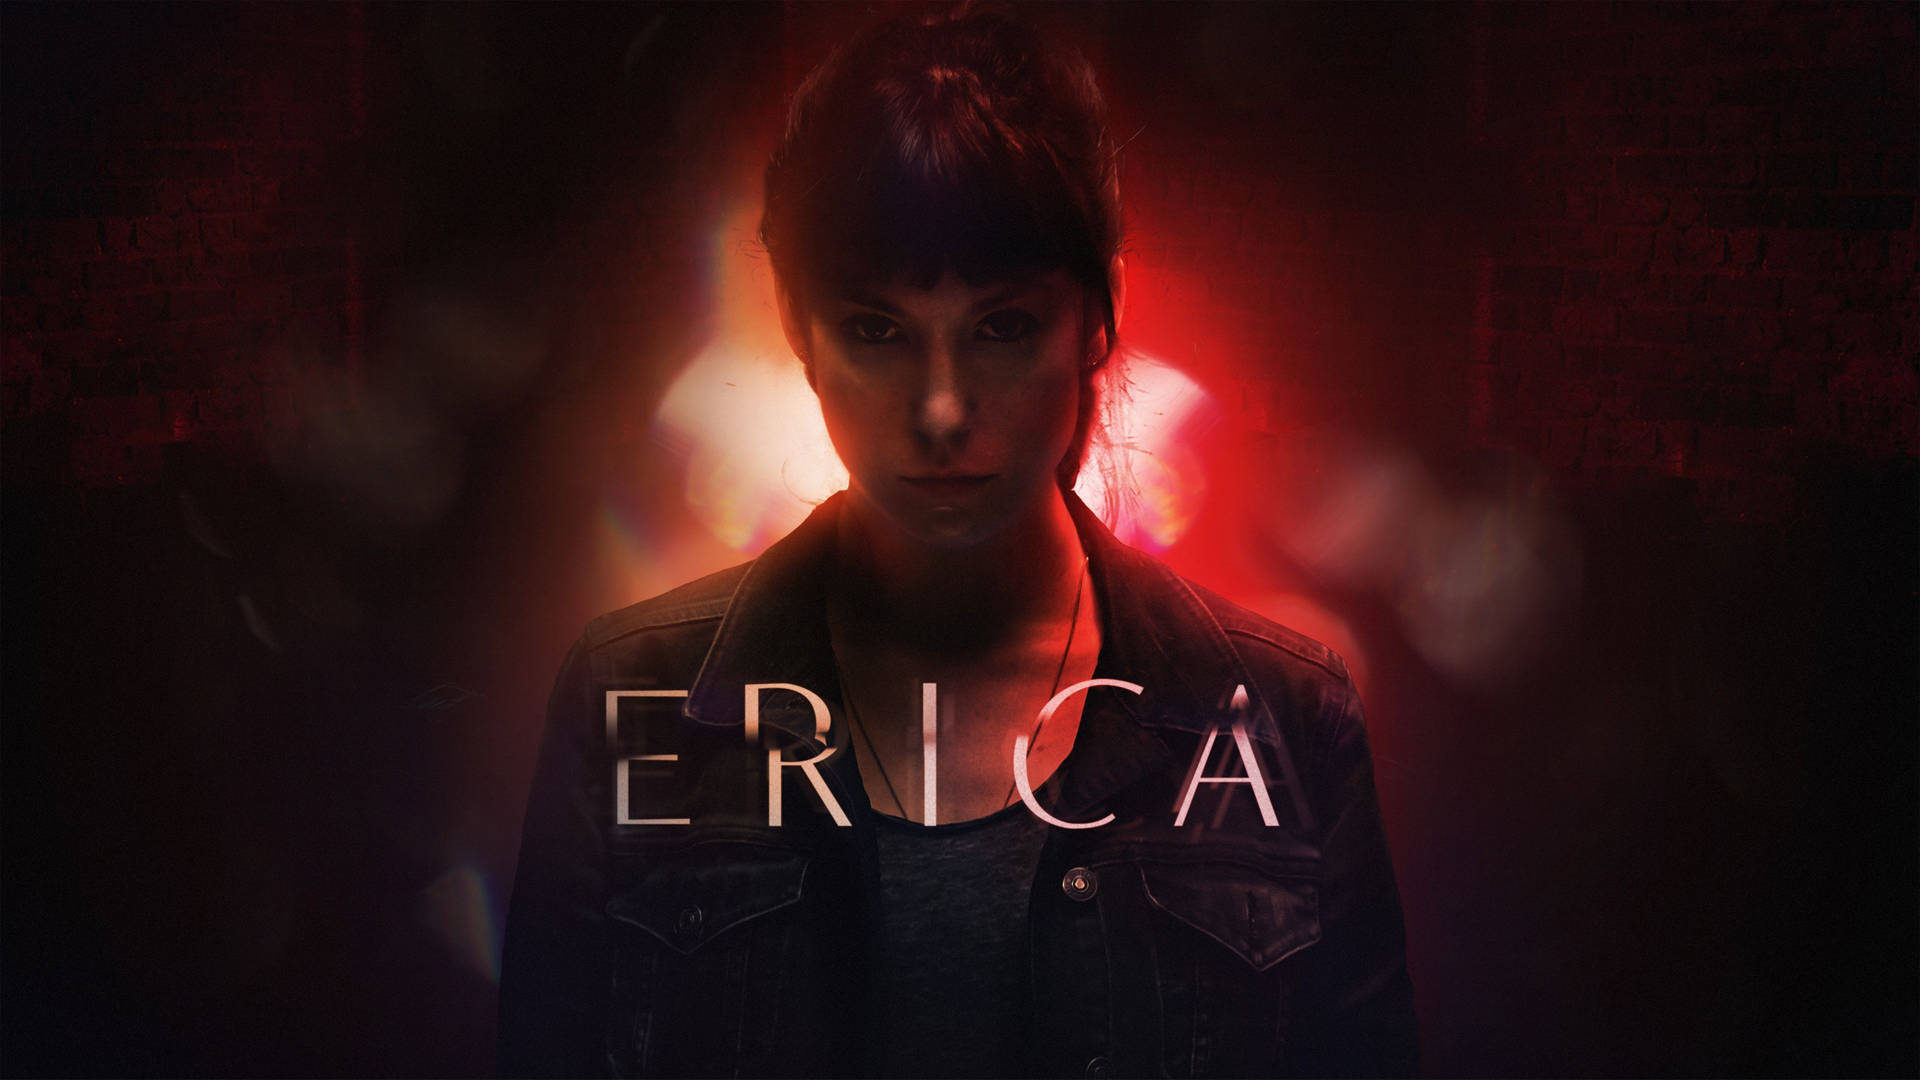 Erica Over Red Light-Source 4K PS4 Wallpaper